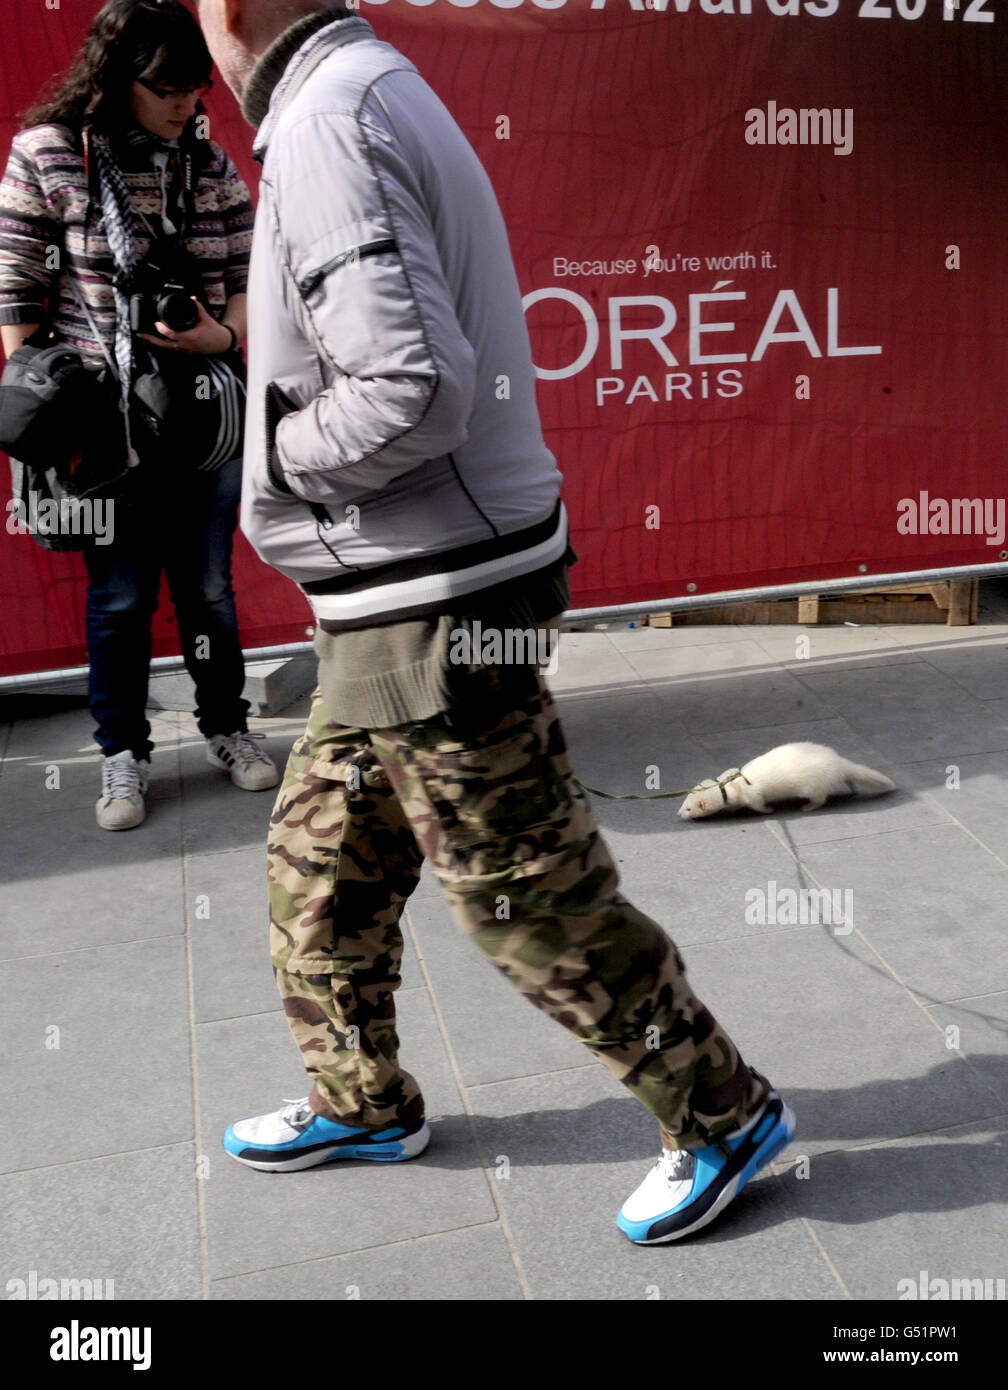 Ferret Walker - London. A man walks a ferret on a lead through central London Stock Photo